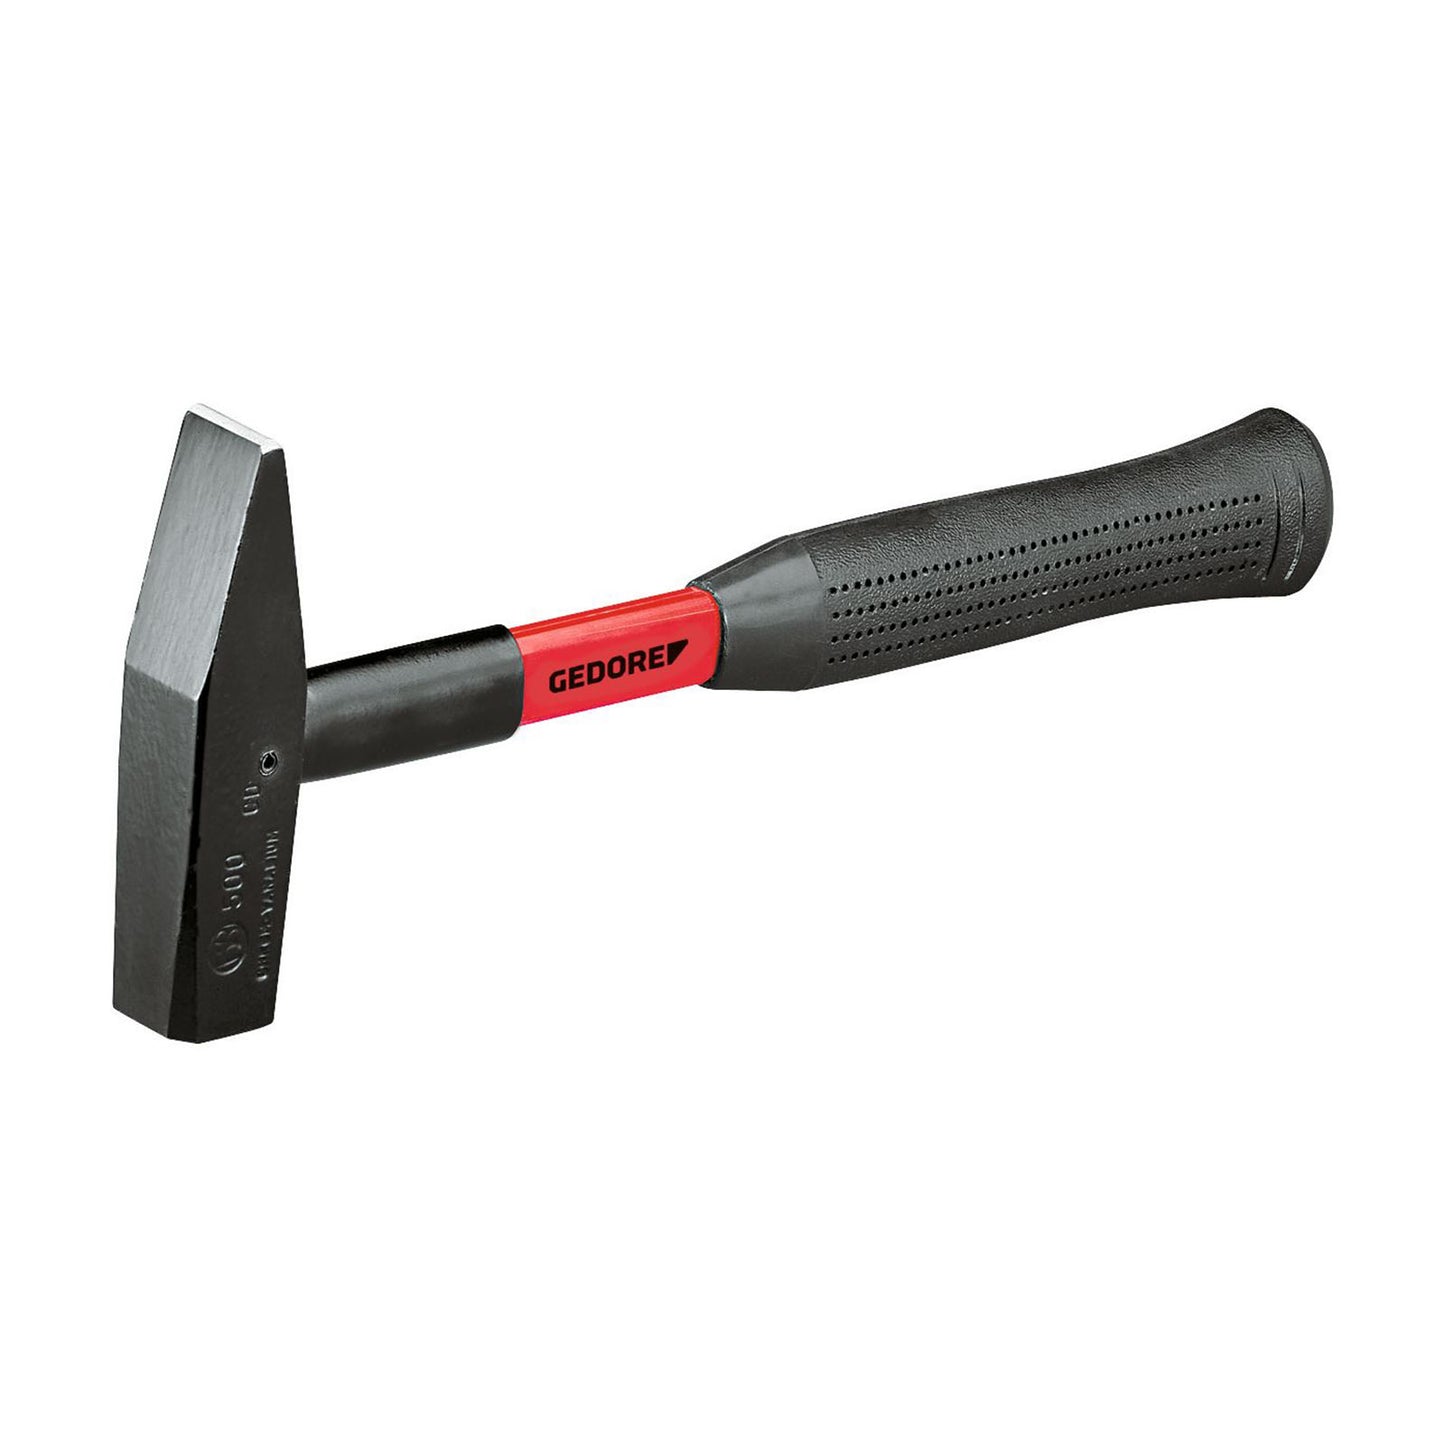 GEDORE 500 F-600 - Fitter's Hammer, 600 g (8598500)